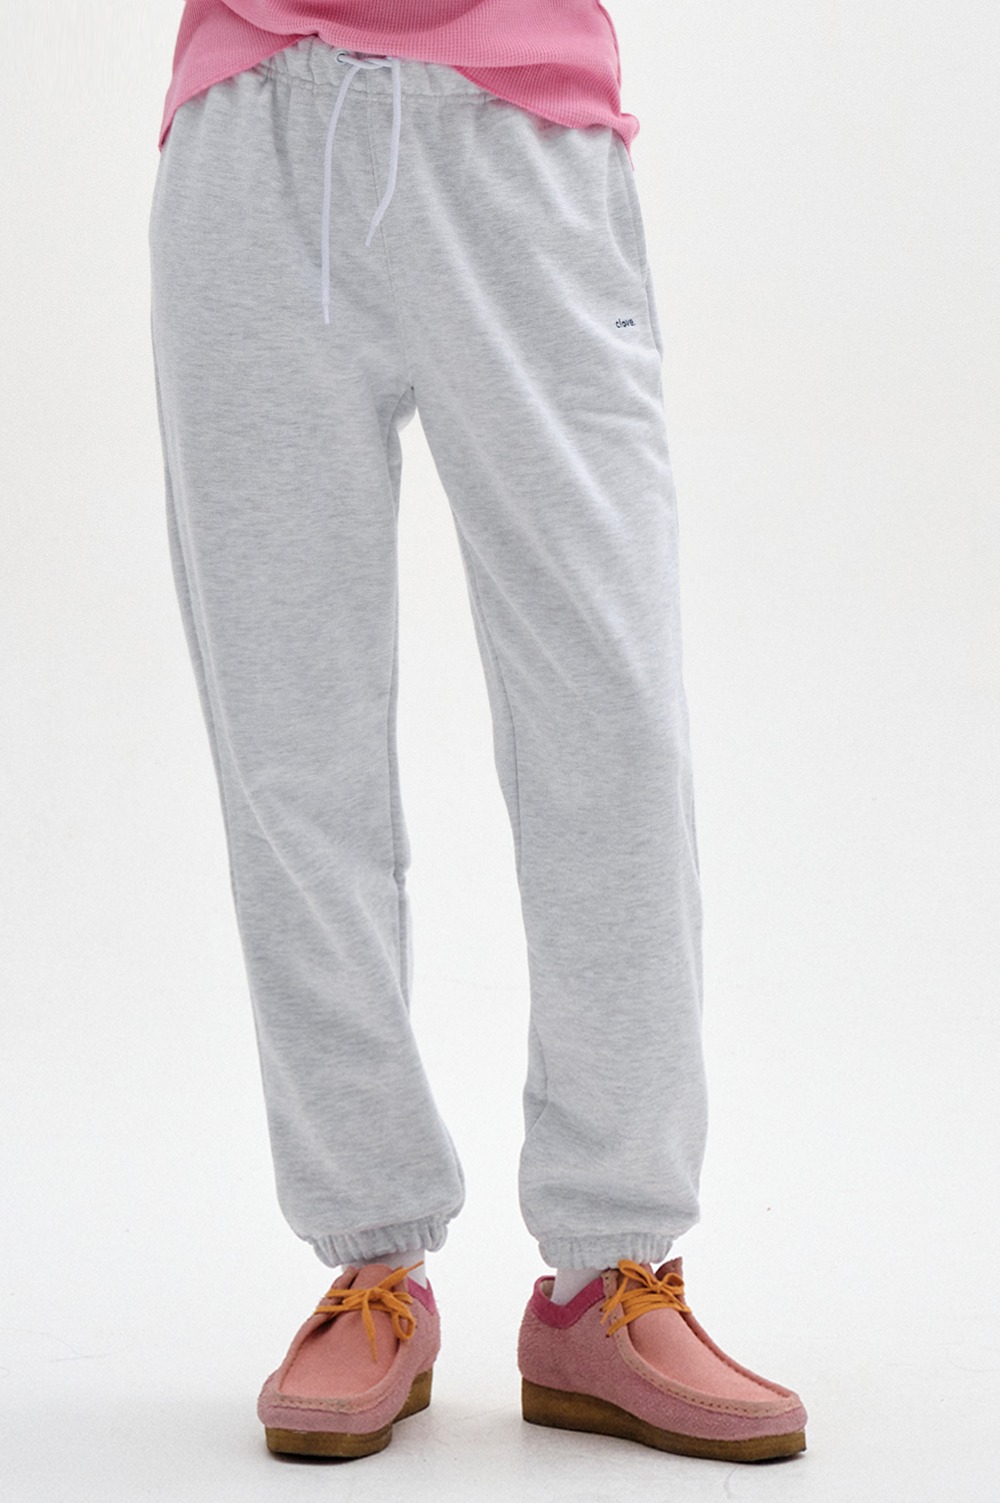 clove - New Active Sweat Pants_Women (Light Grey)